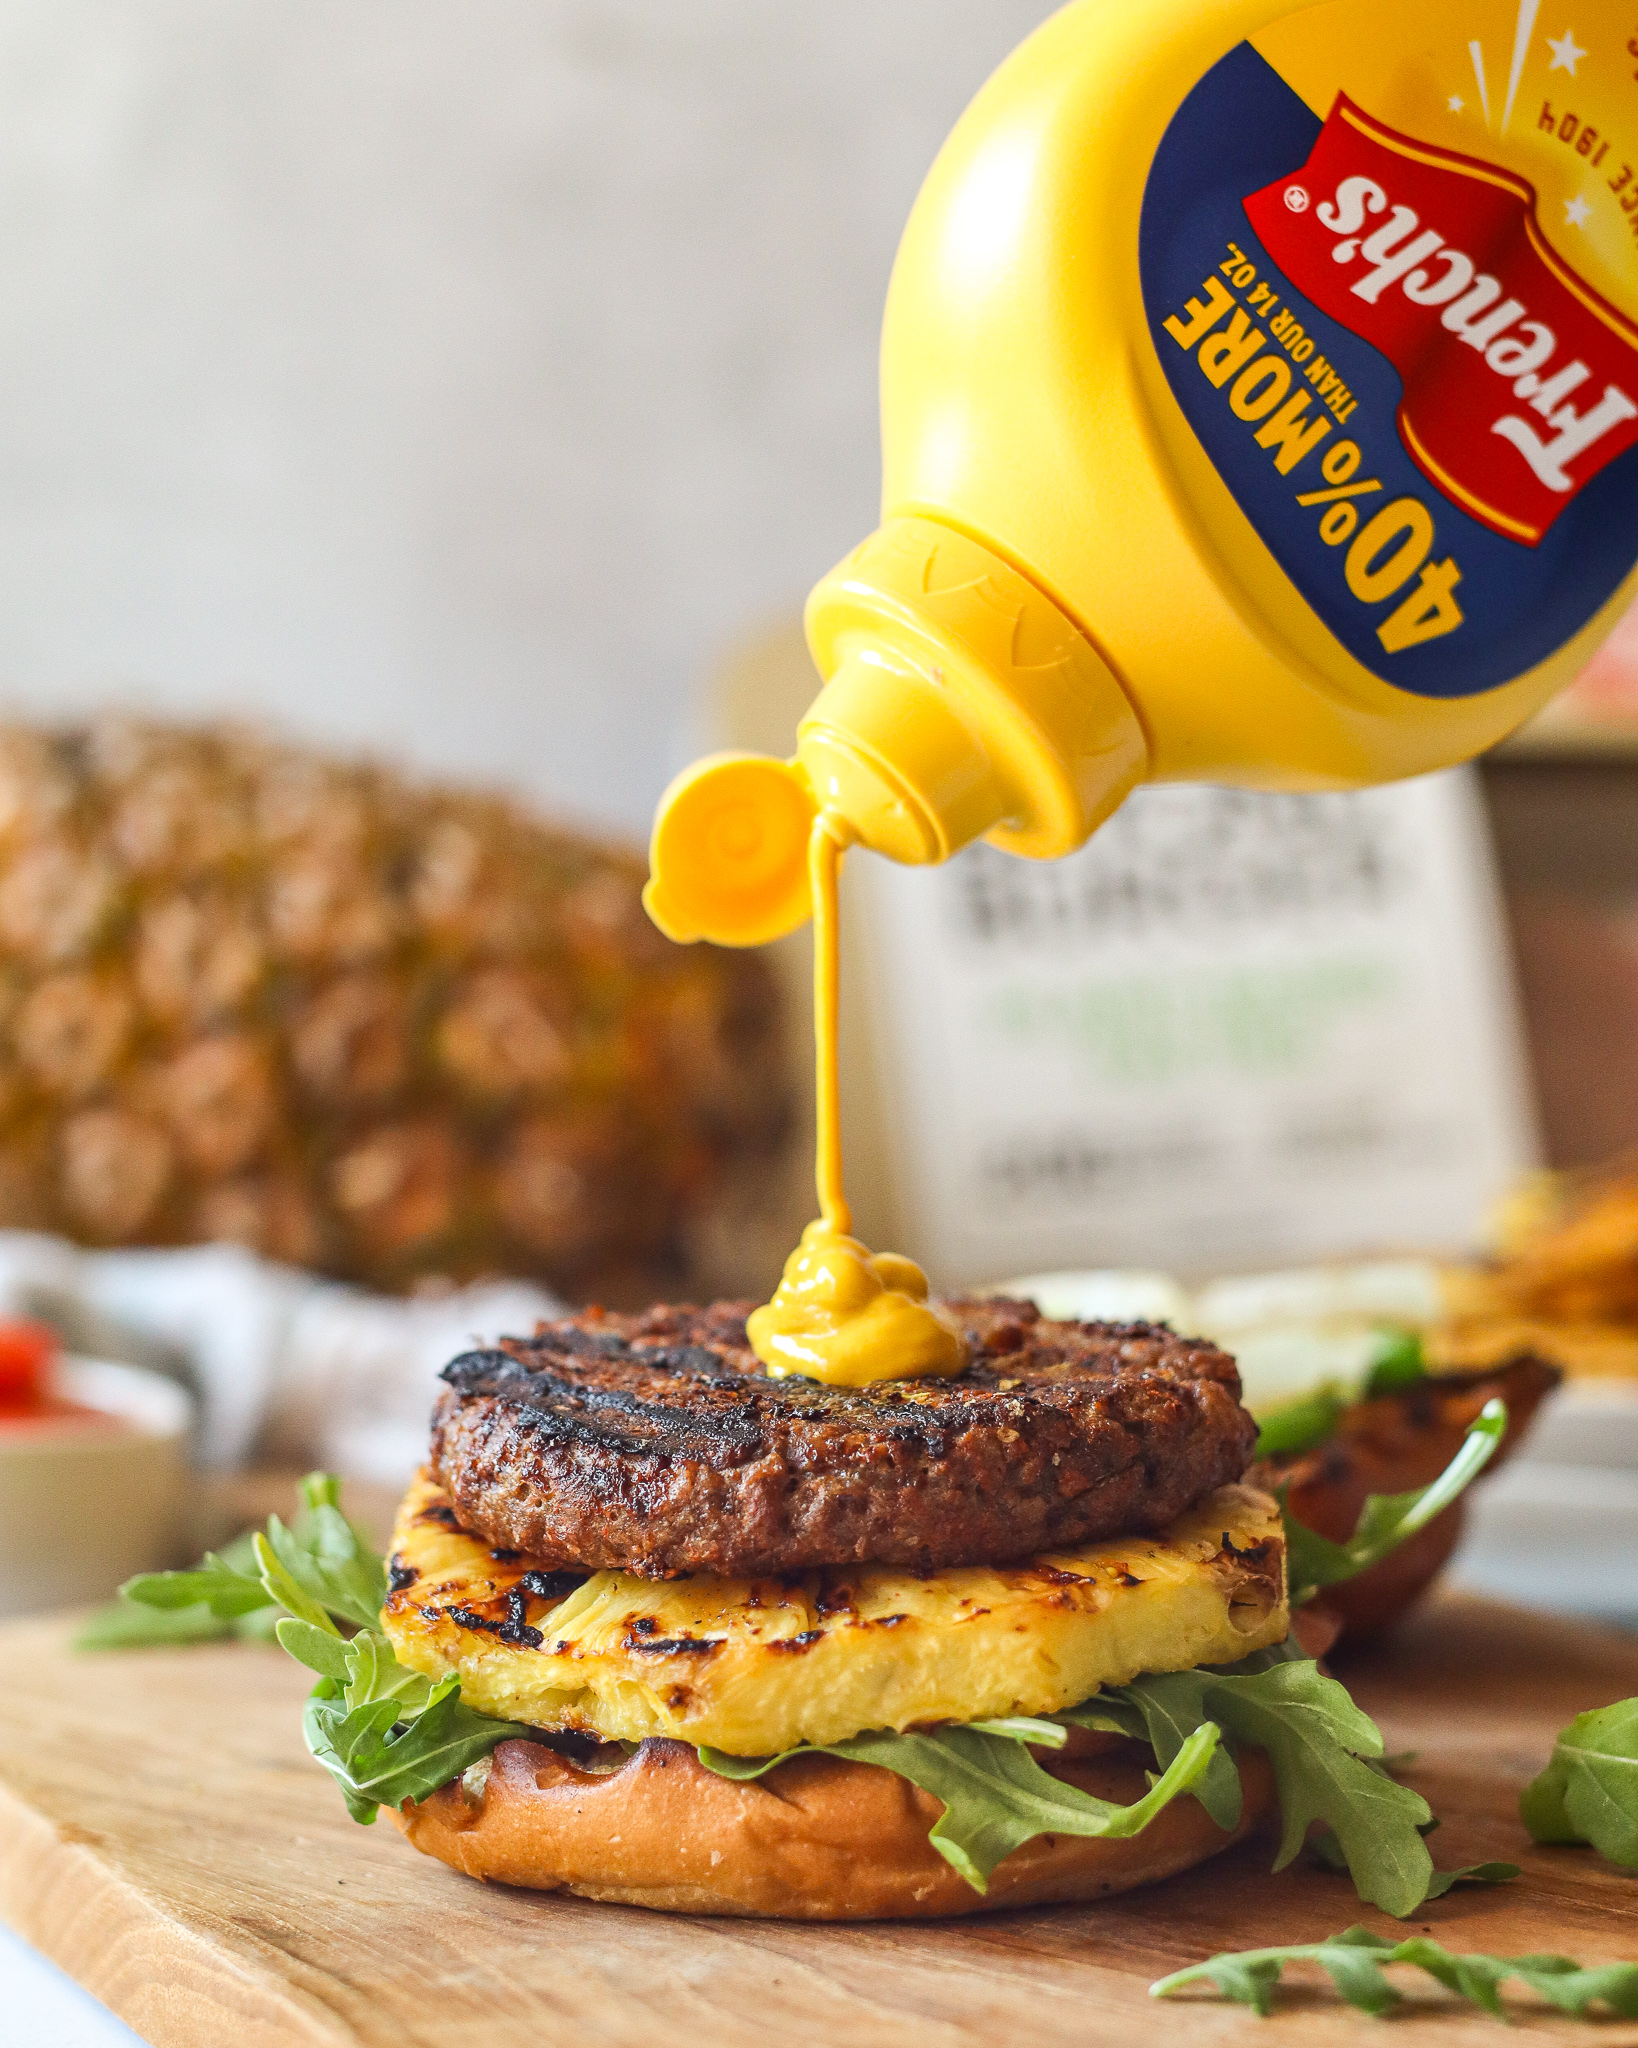 Mustard on outside burger